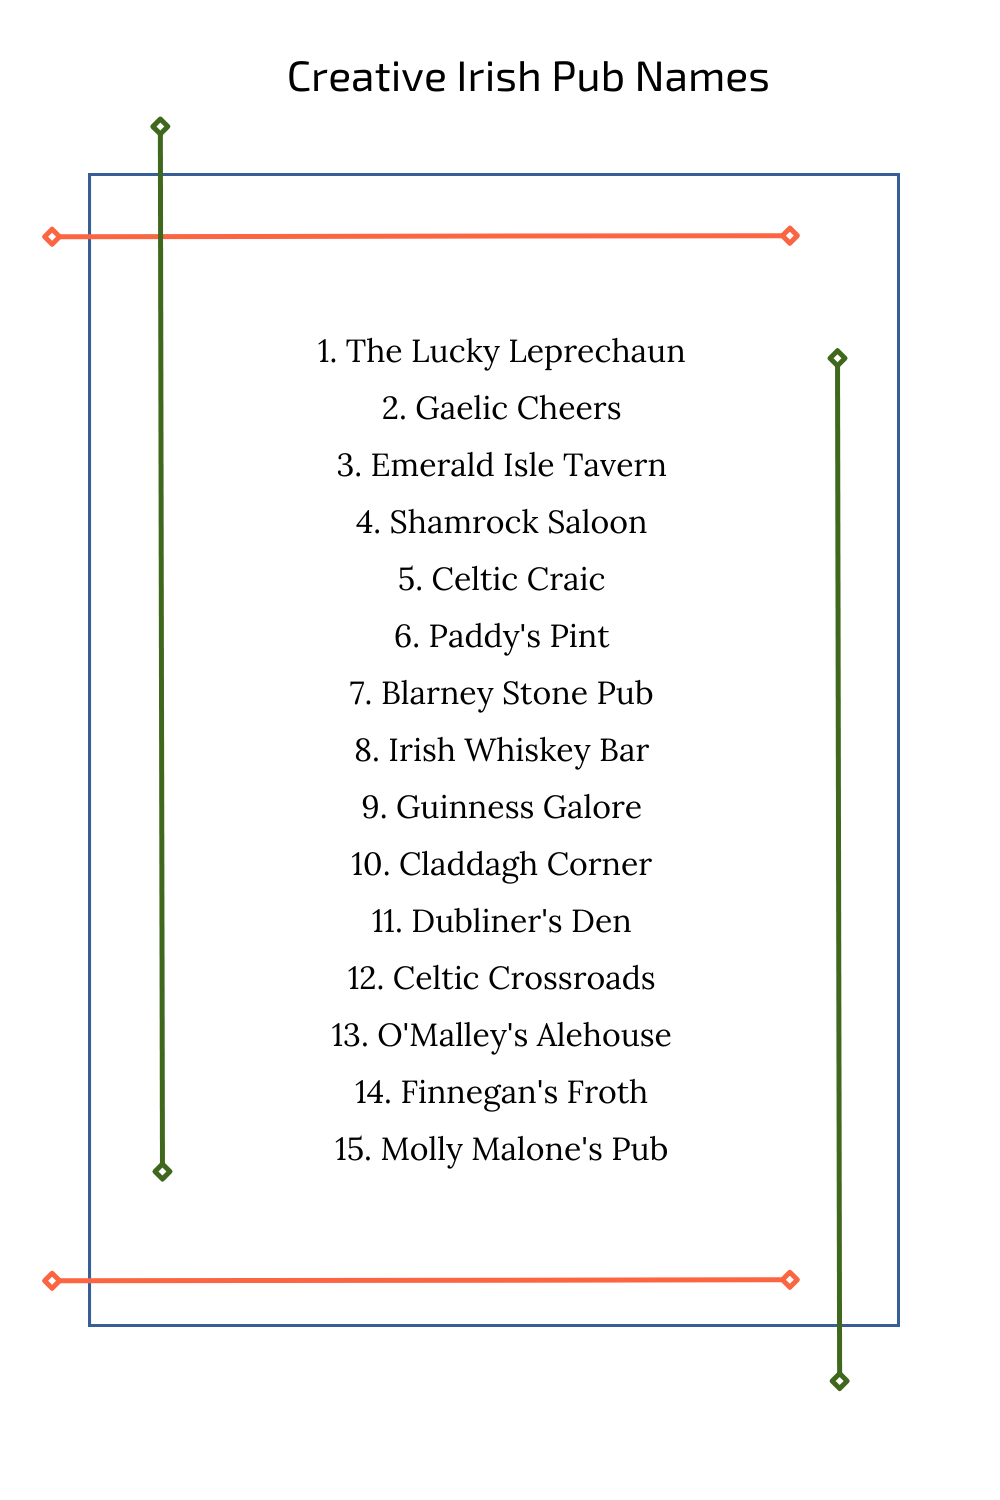 Creative Irish Pub Names